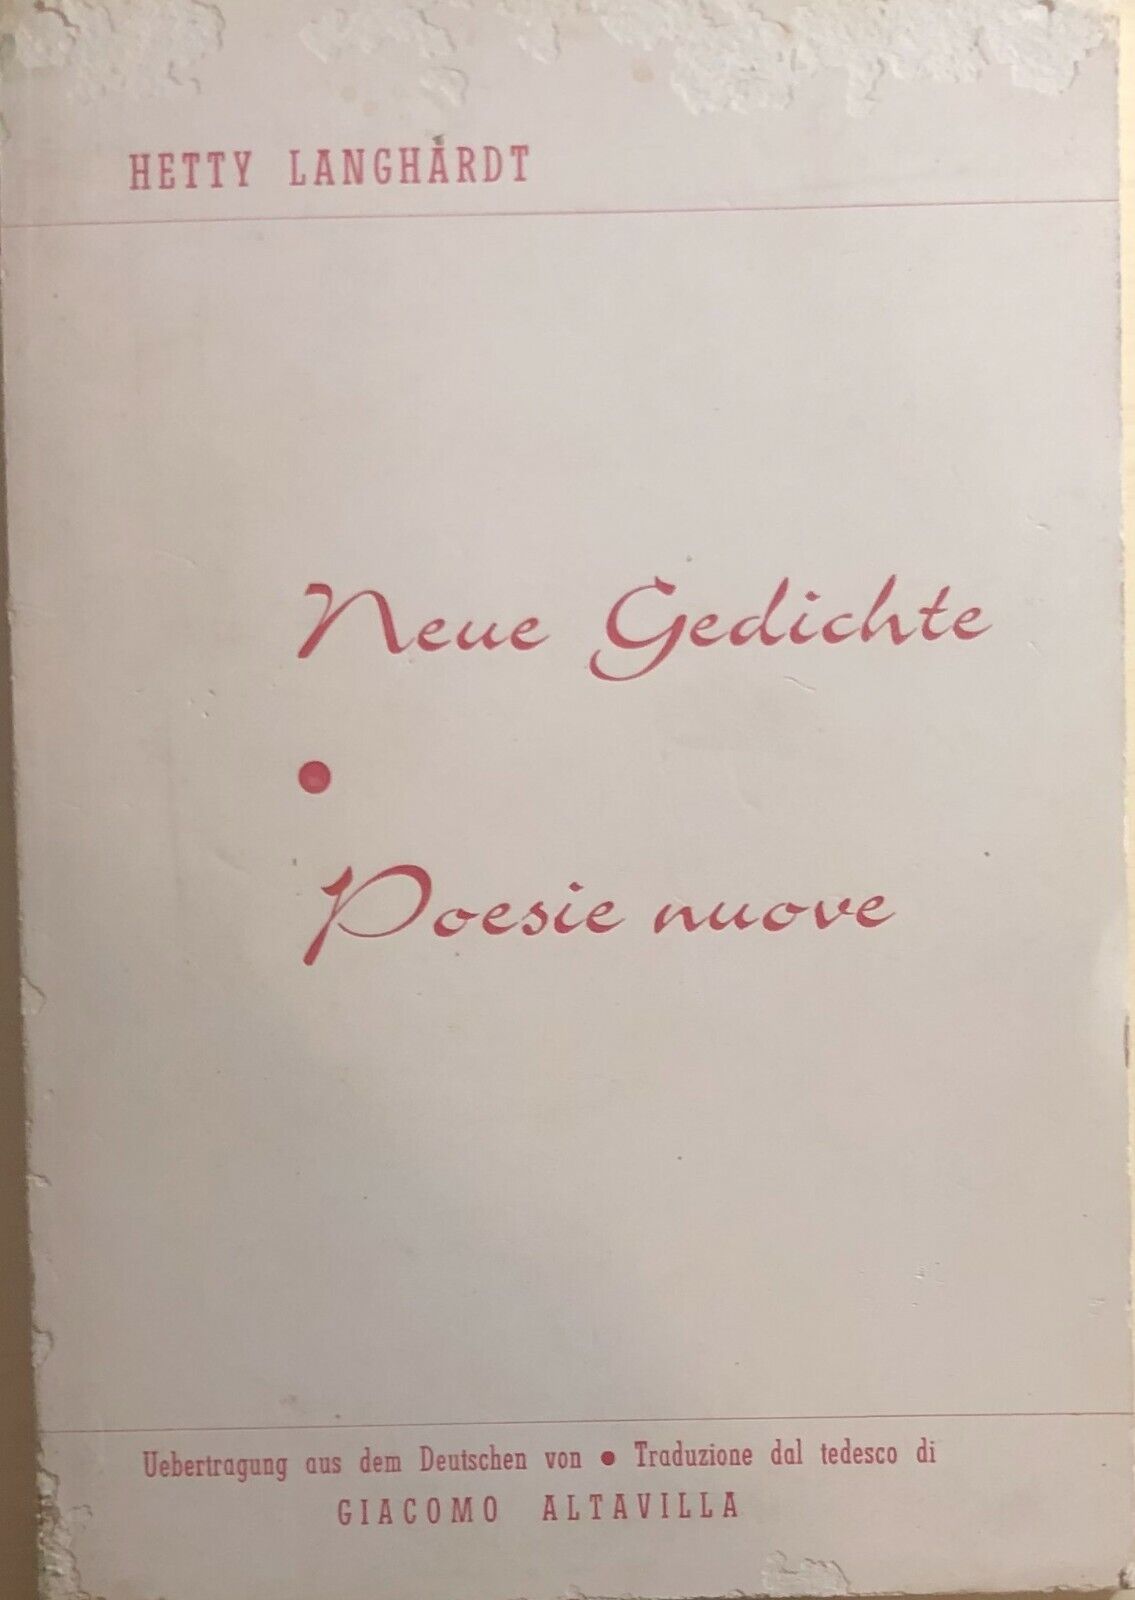 Neue gedichte - Poesie nuove di Hetty Langhardt, 1975, Tipografia Pantano